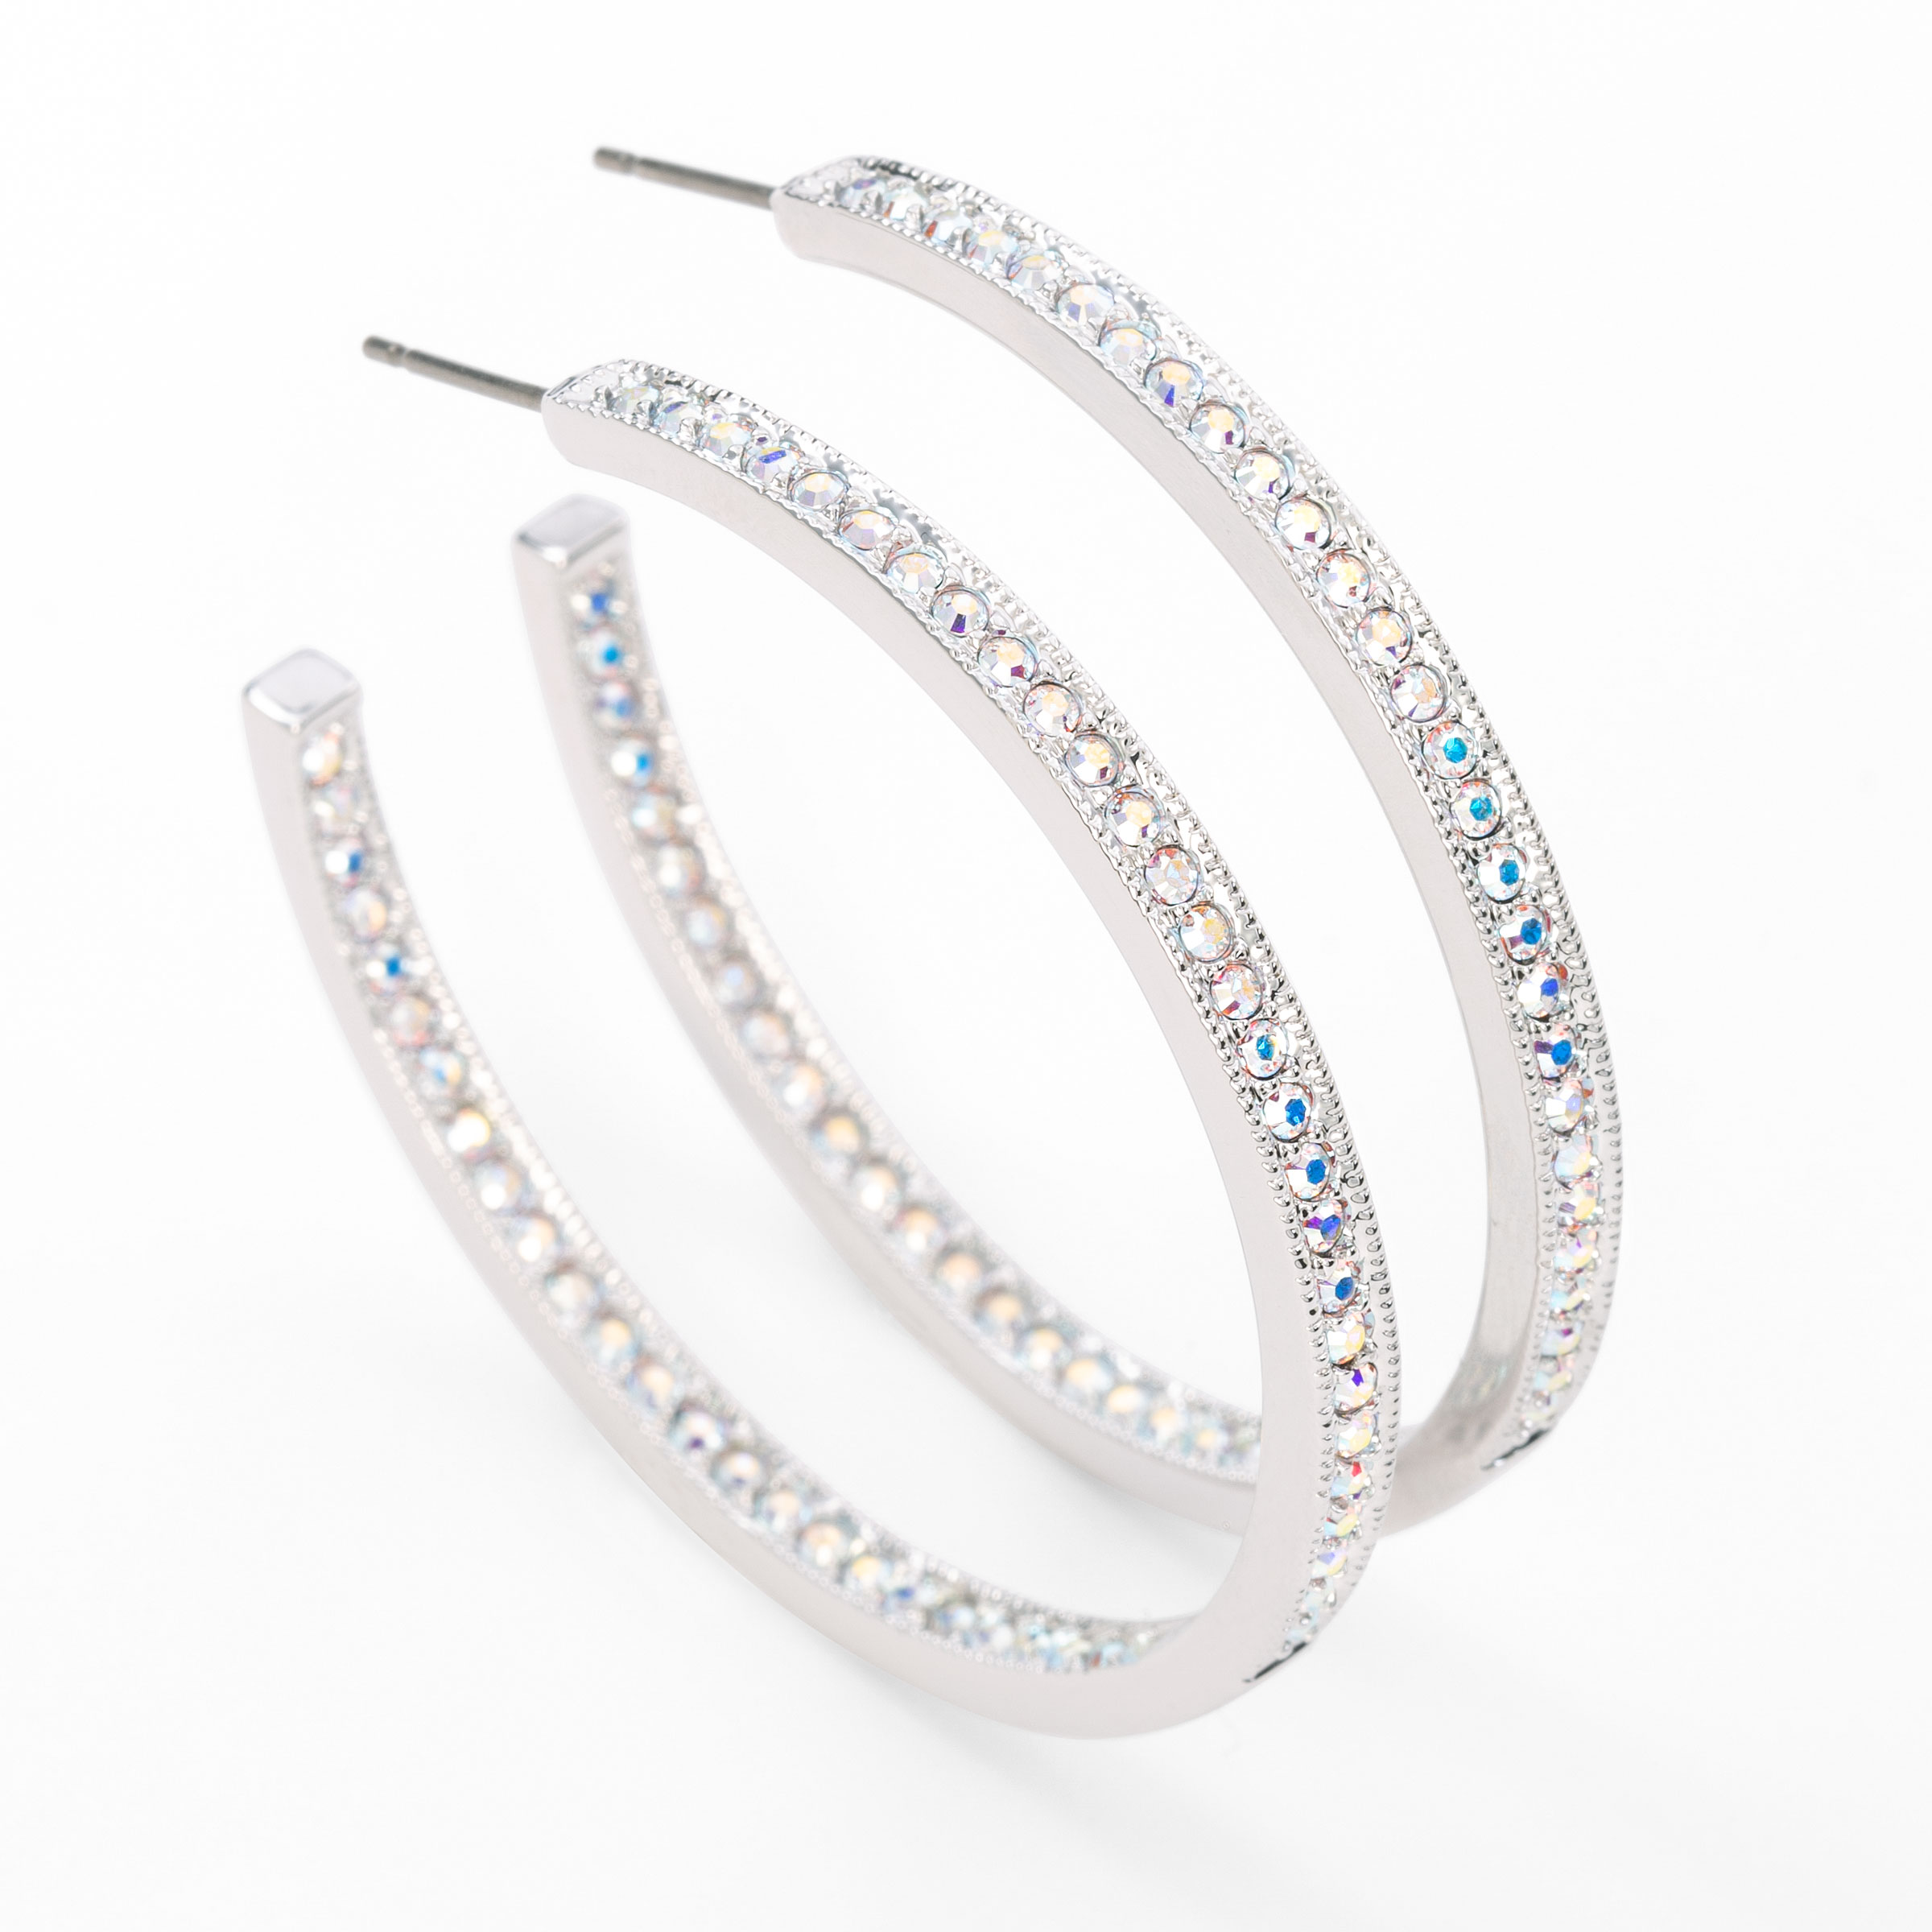 Hidden Gems Earrings, Crystal Aurore Boreale